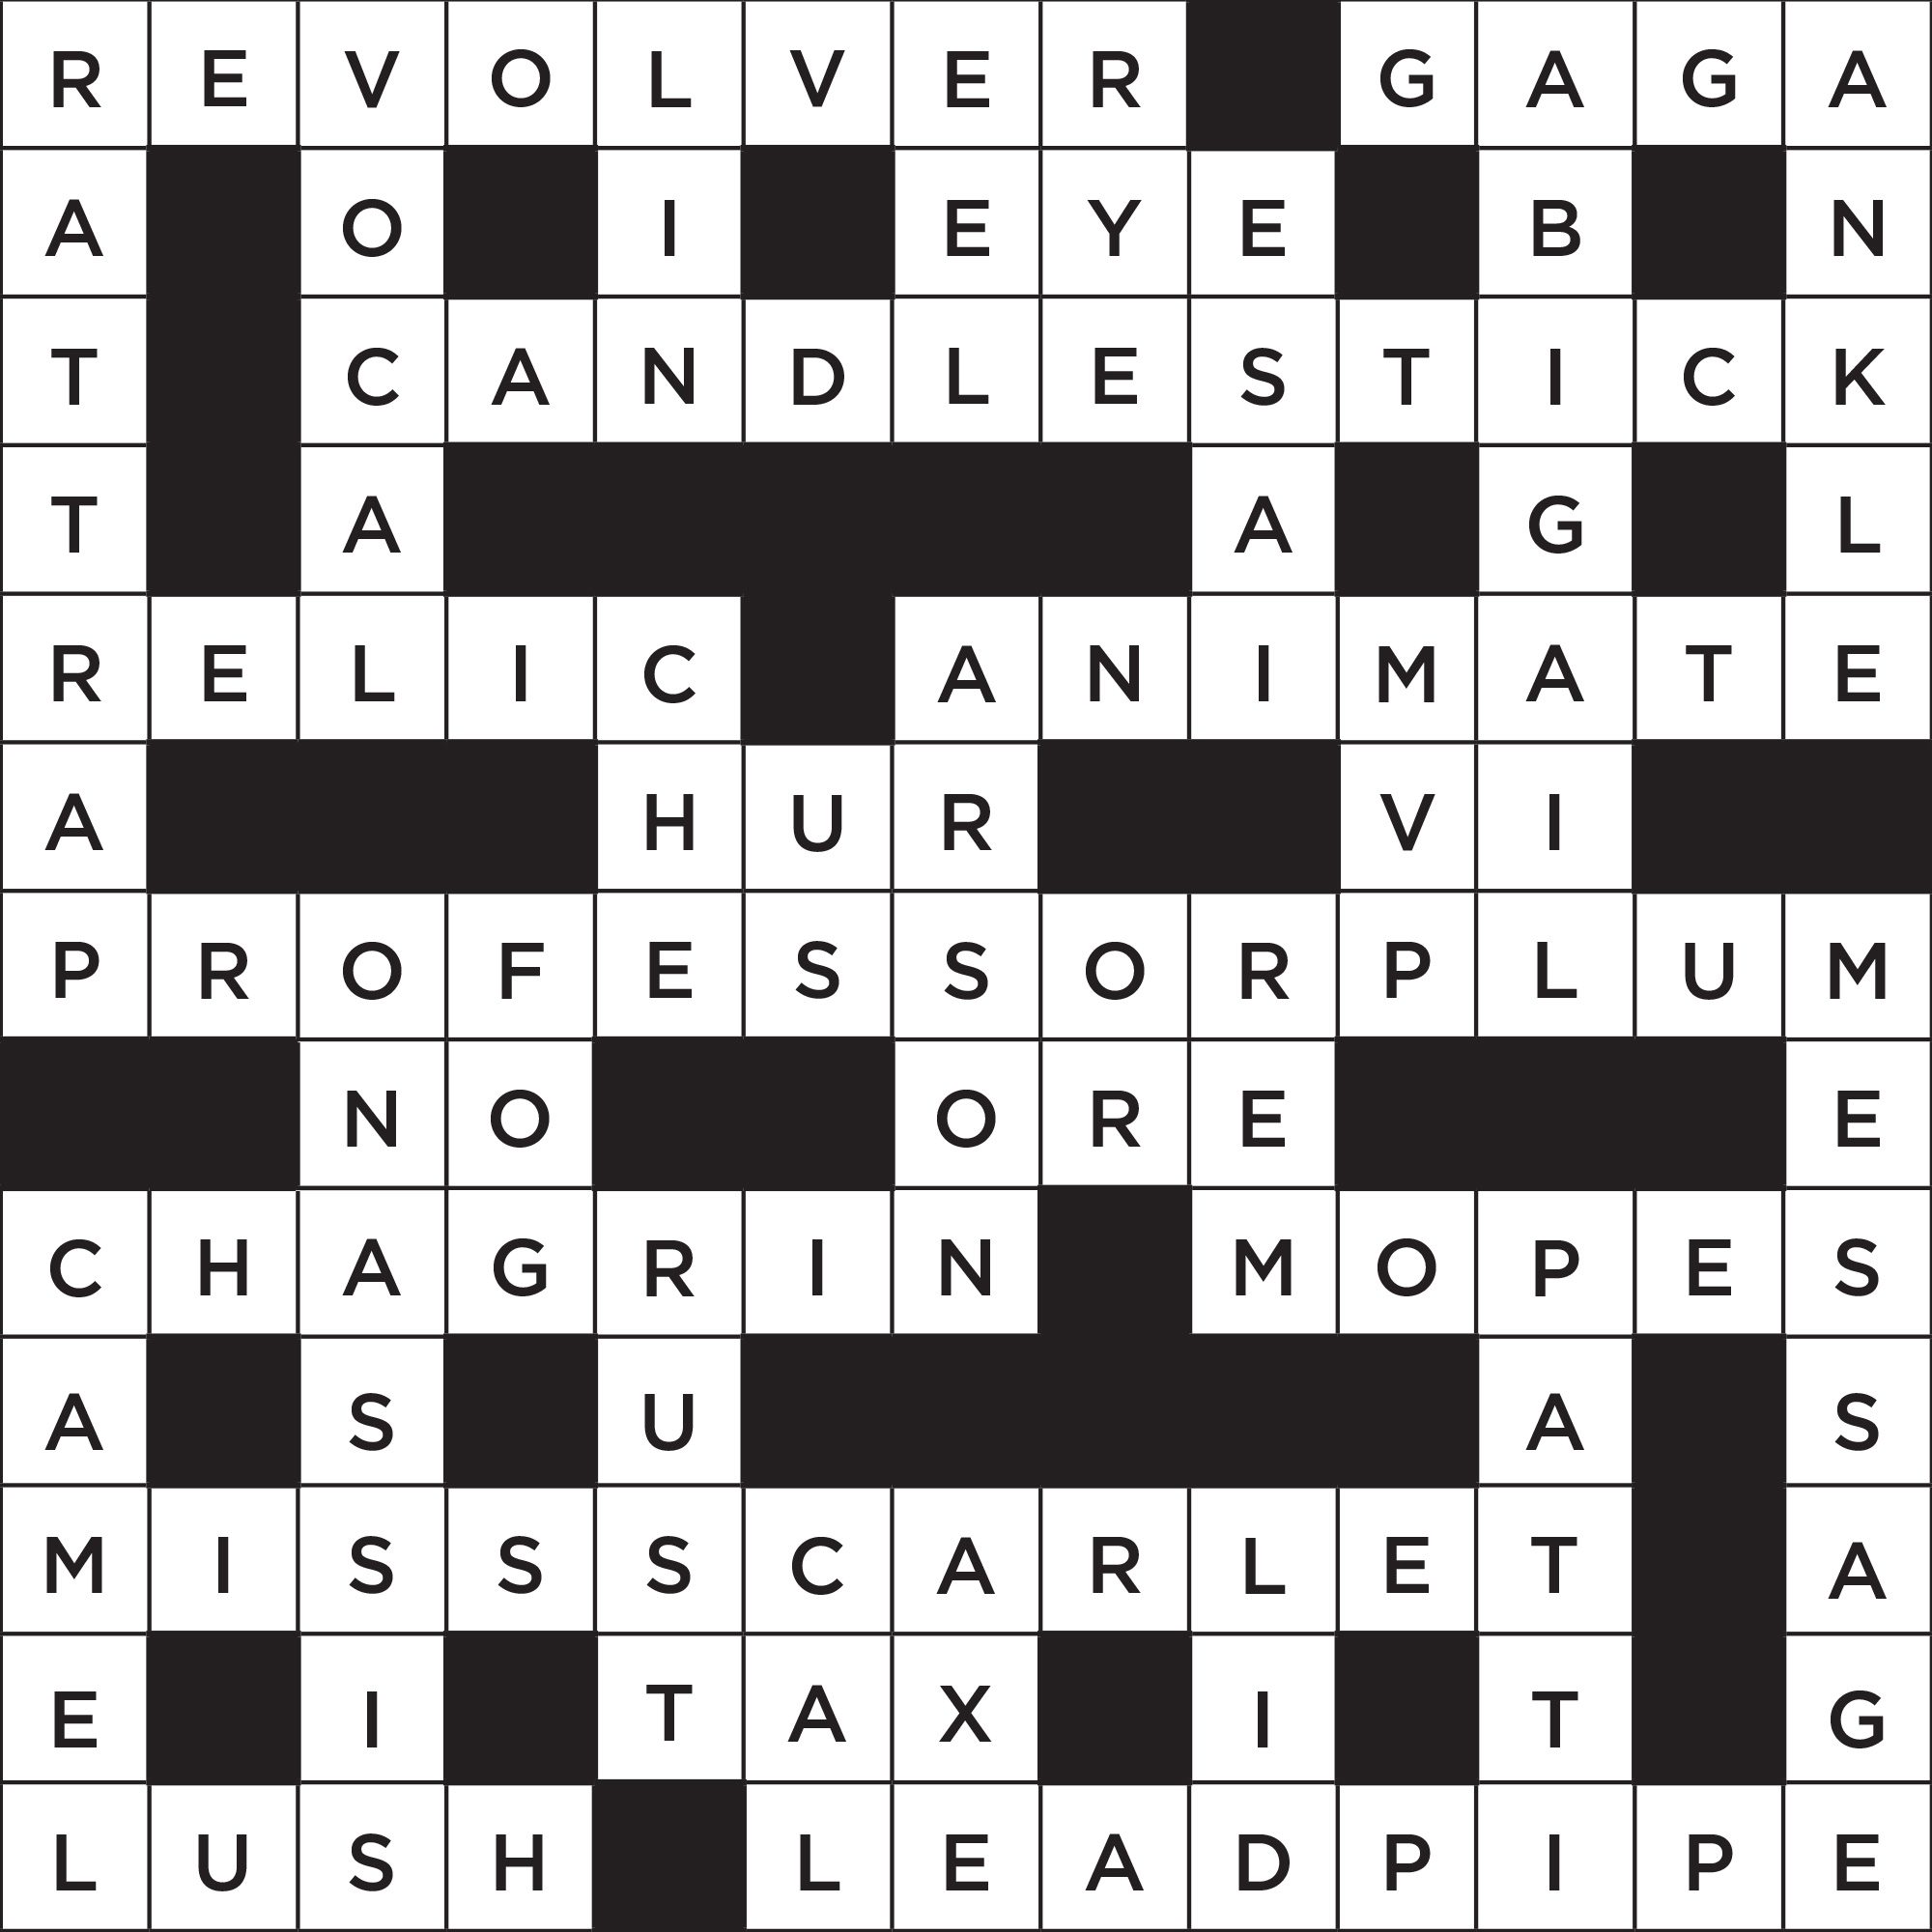 crossword puzzle clue for dissertation